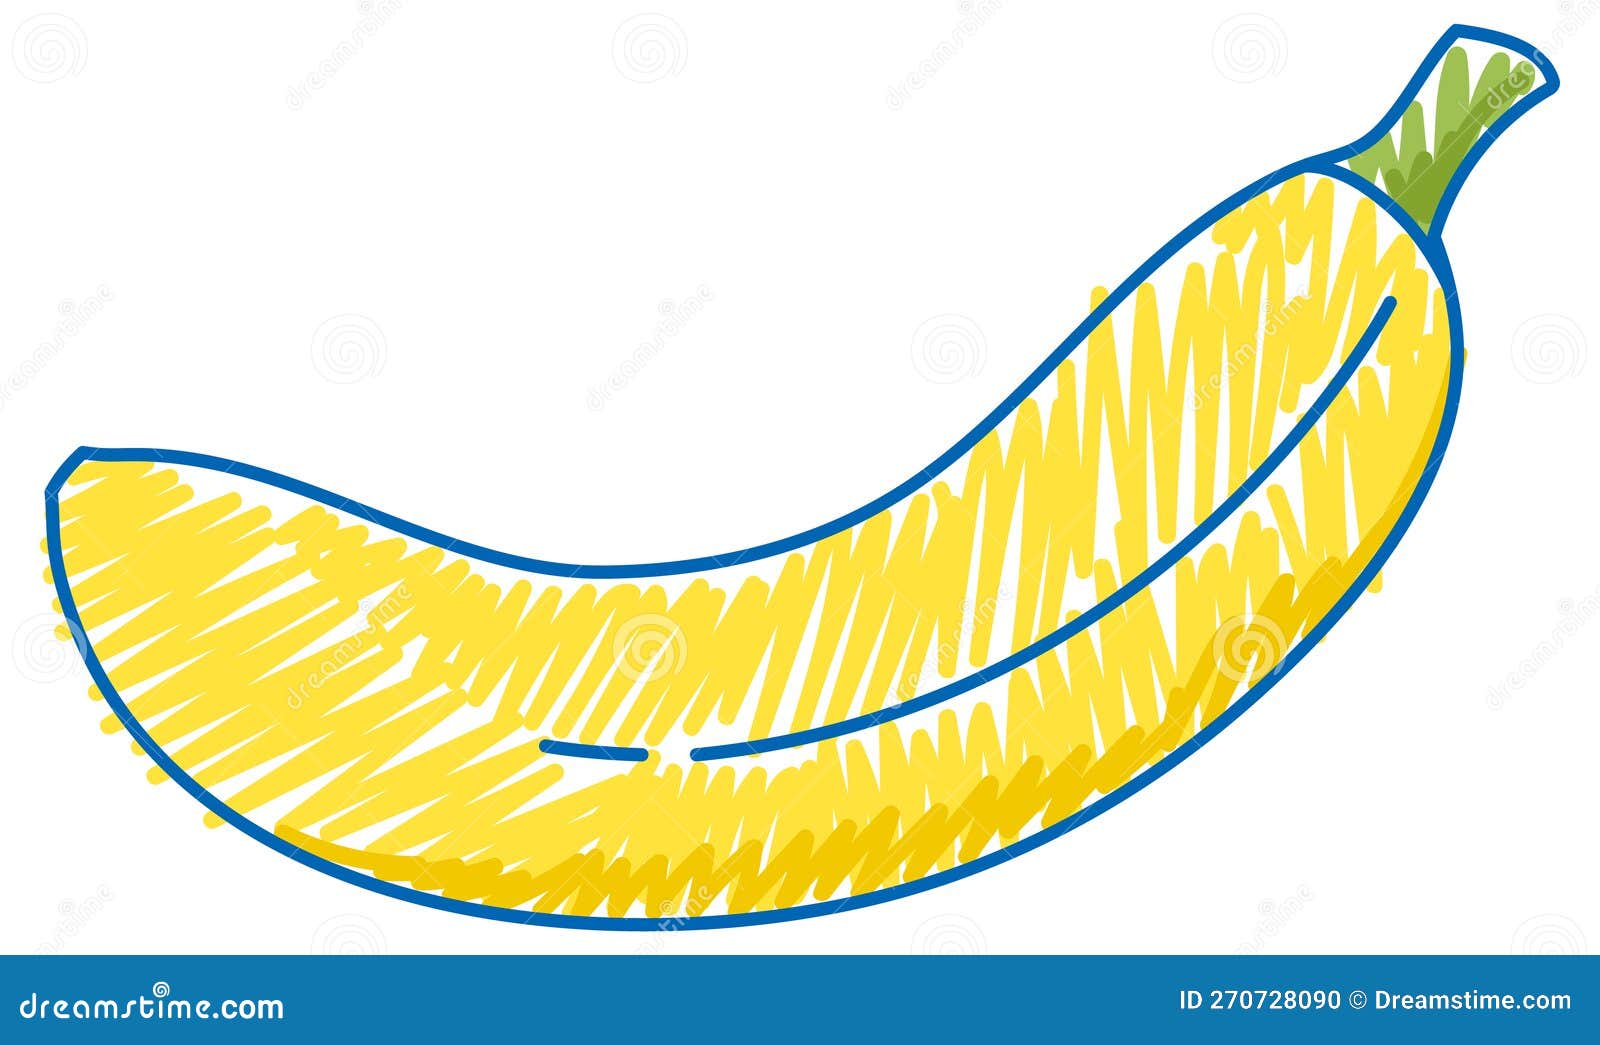 banana | Colorful art, Banana, Objects design